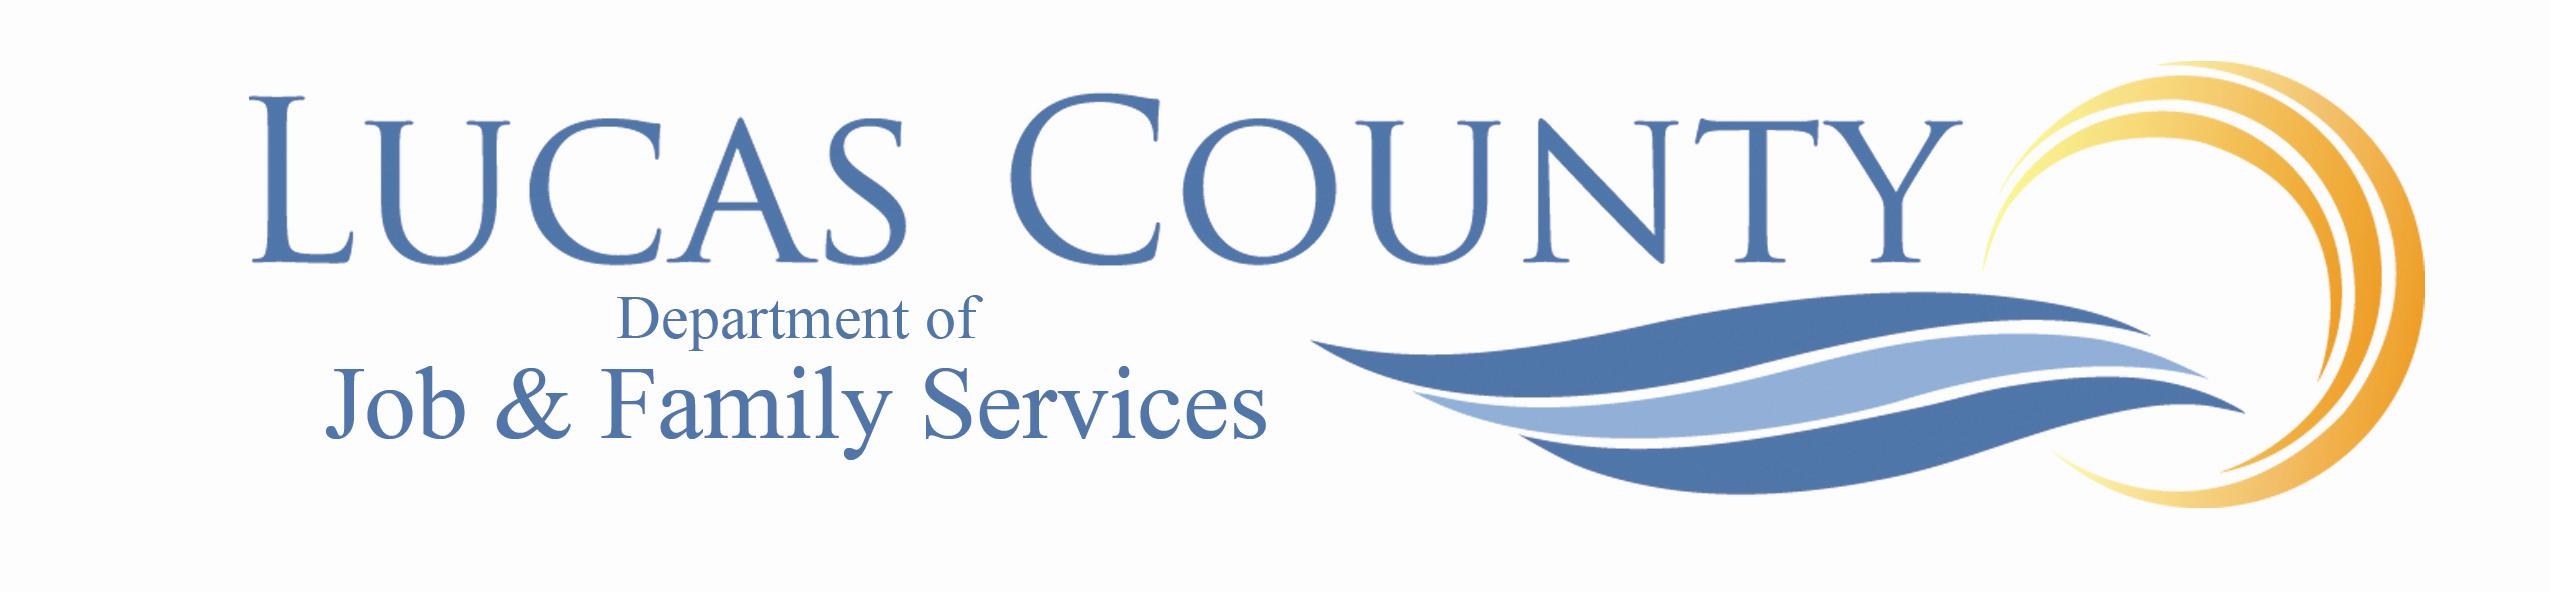 Lucas County JFS logo